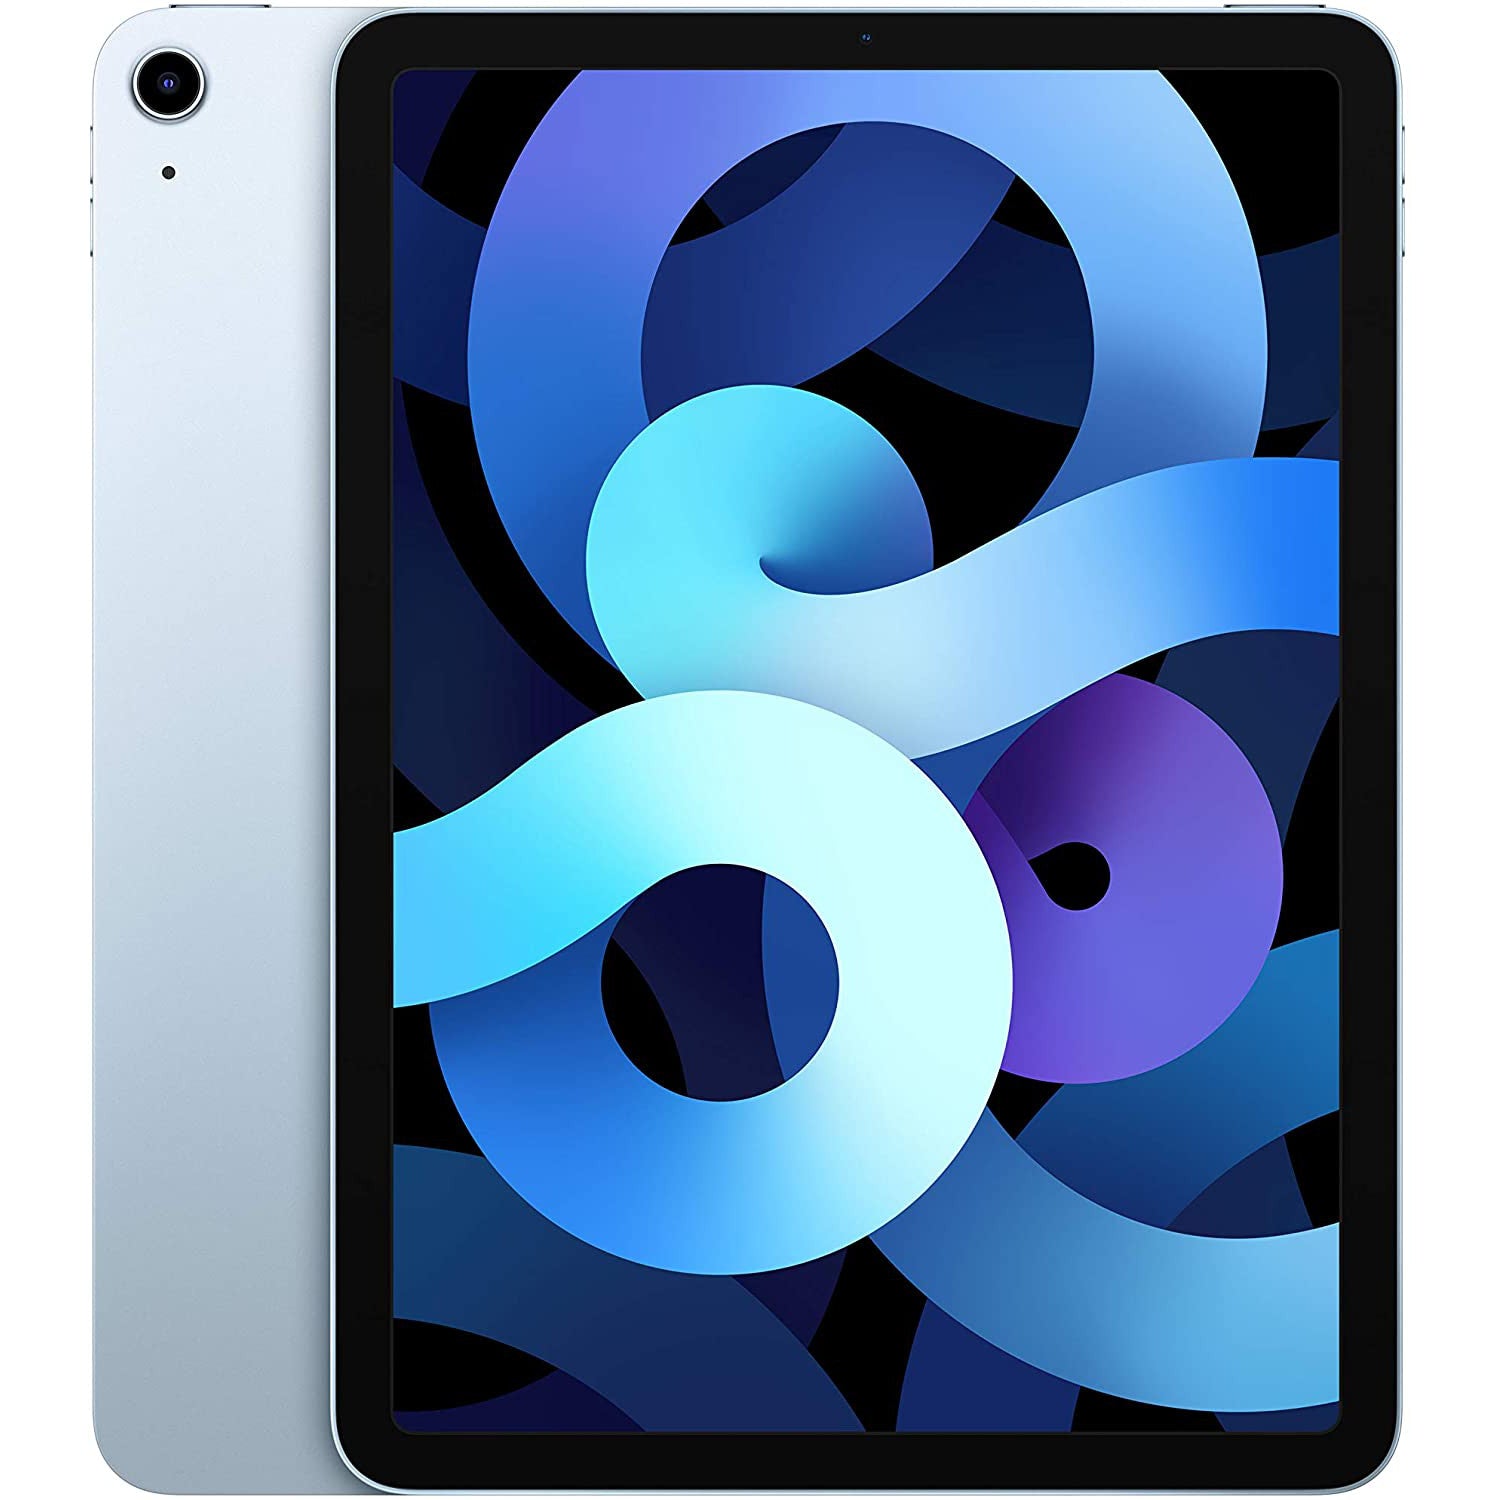 iPad Air 4 256GB WiFi - Blau - Makellos